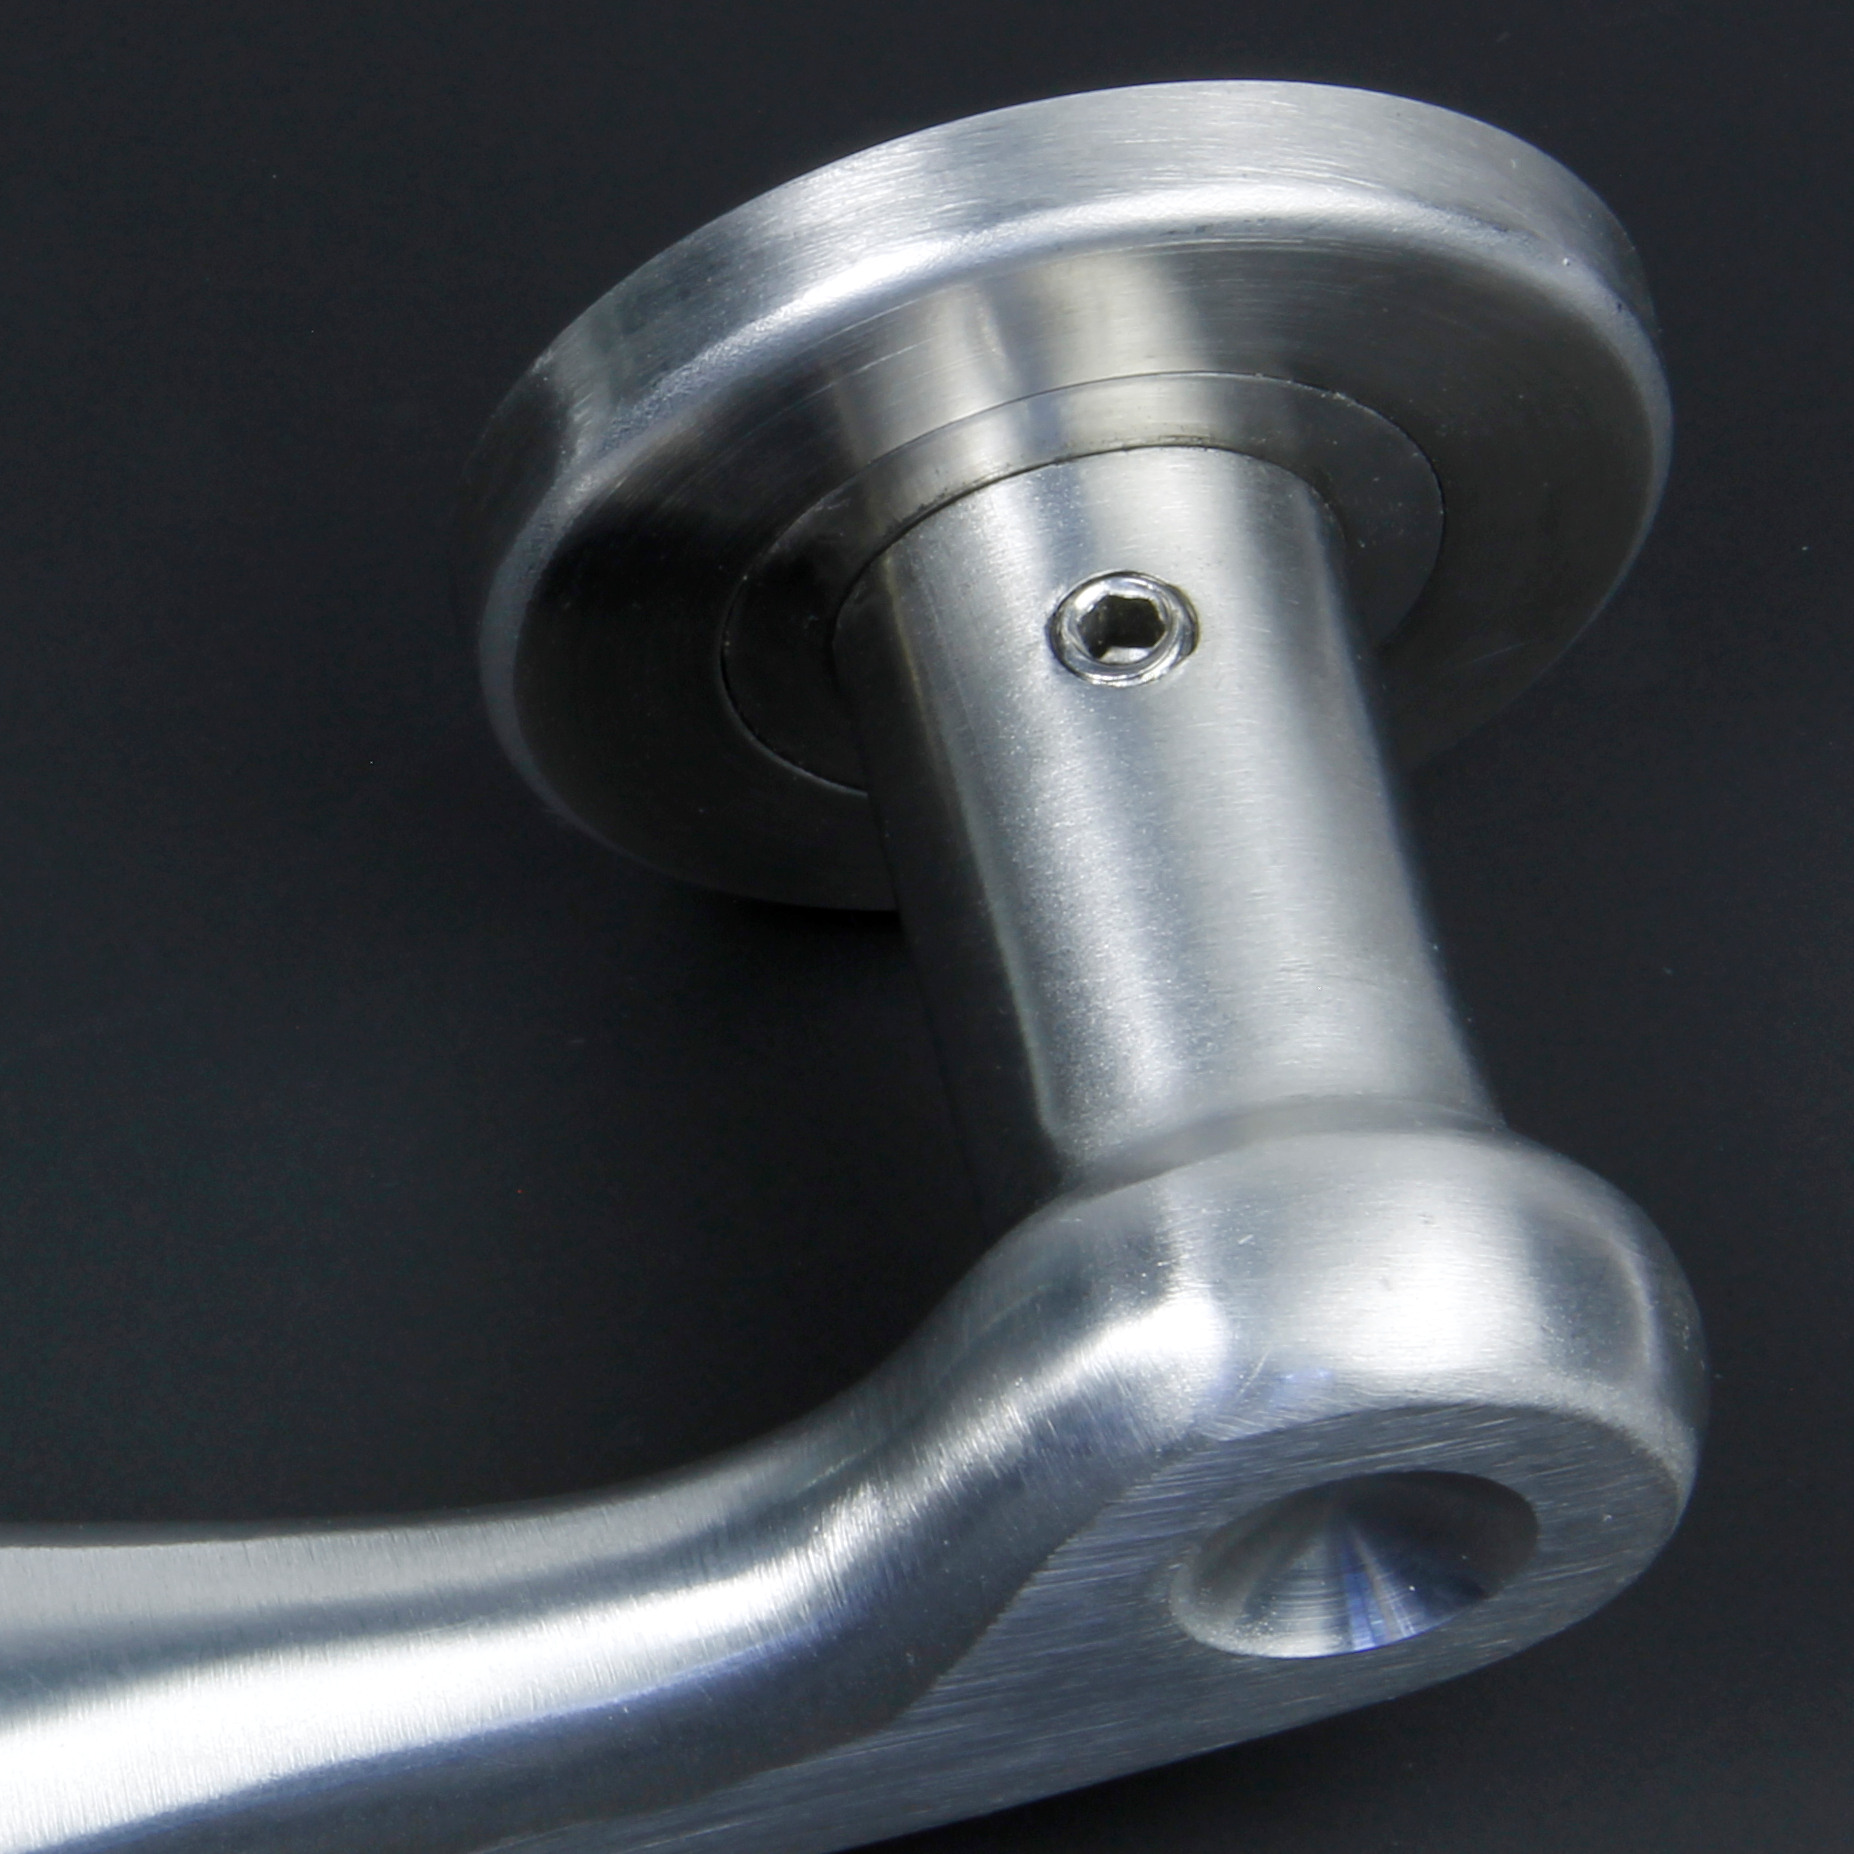 Grub screw used on a door handle mechanism